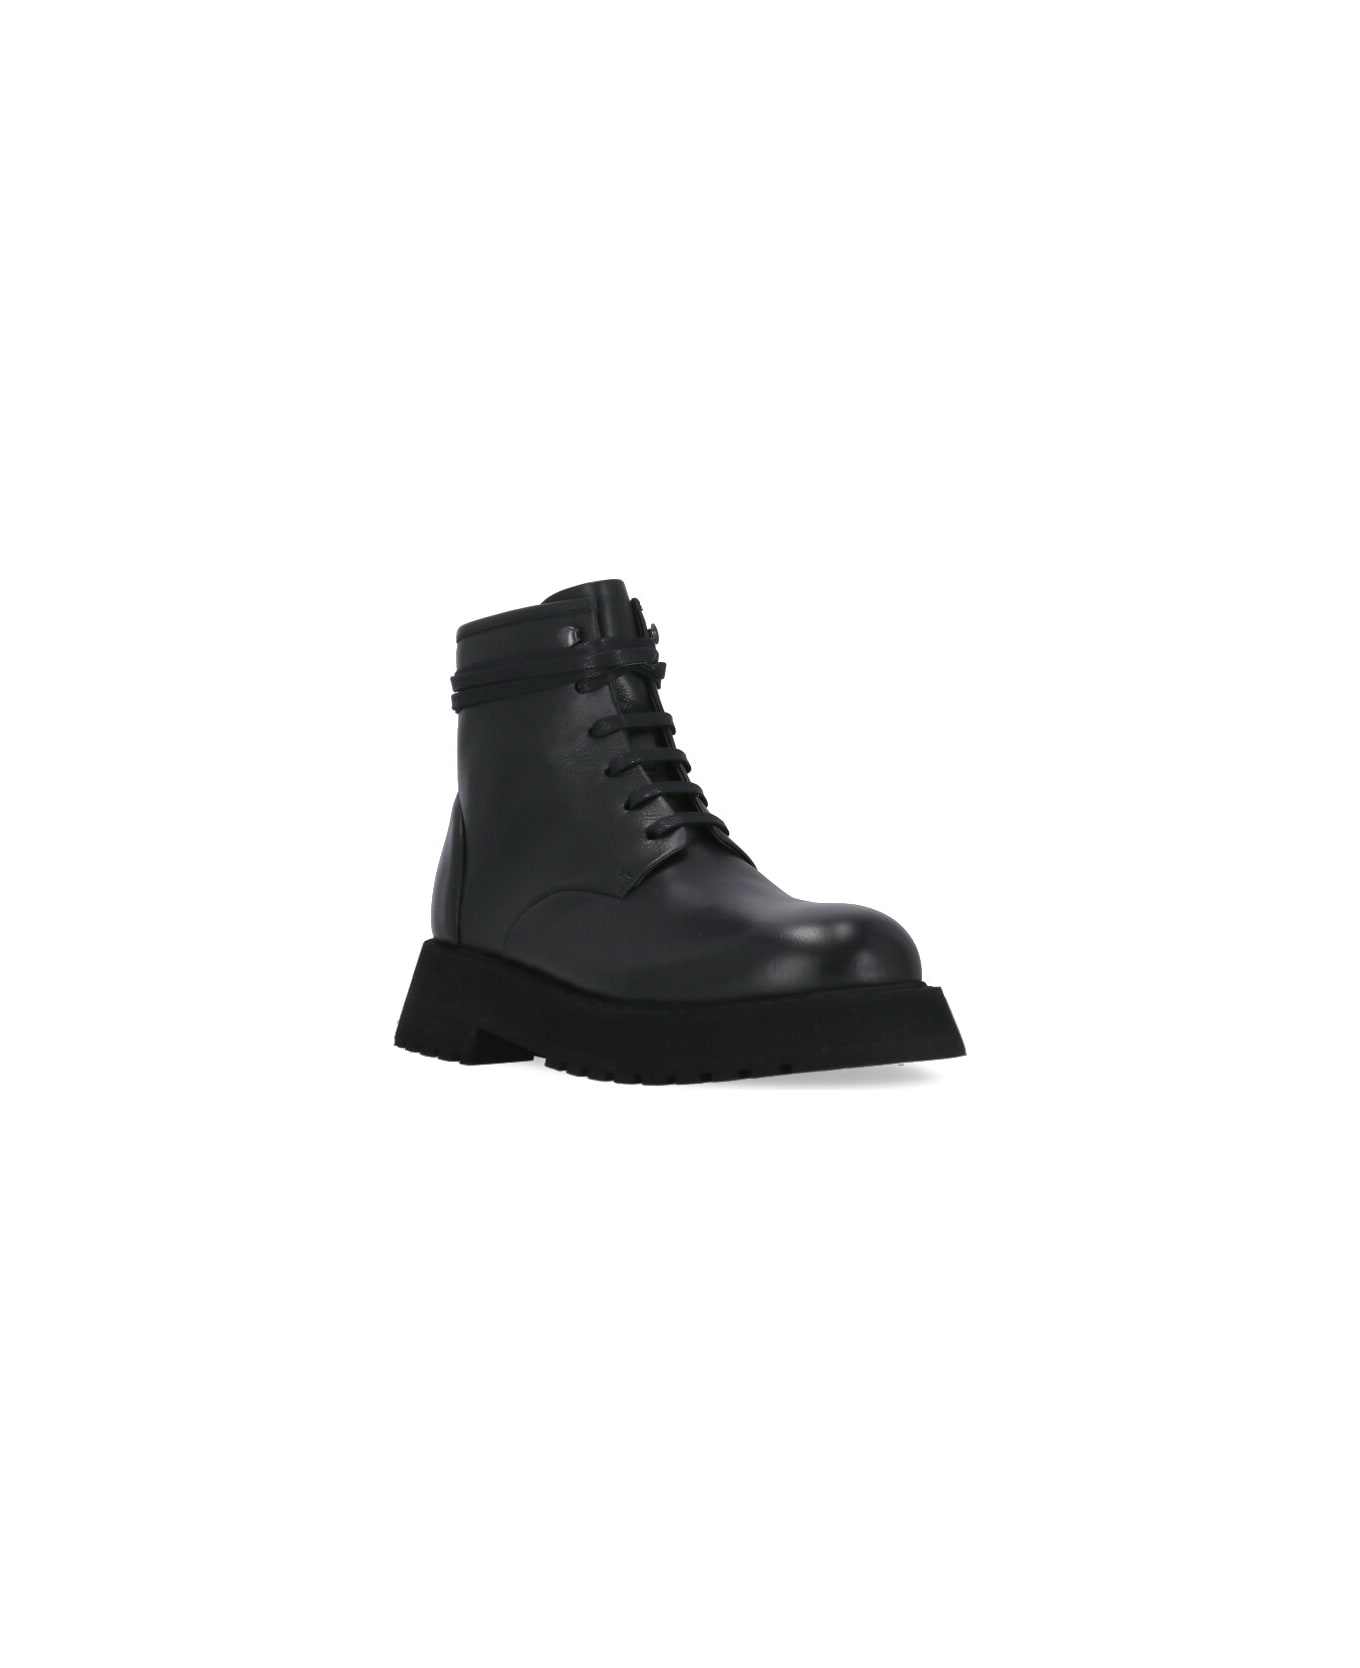 Marsell Micarro Boots - Black ブーツ